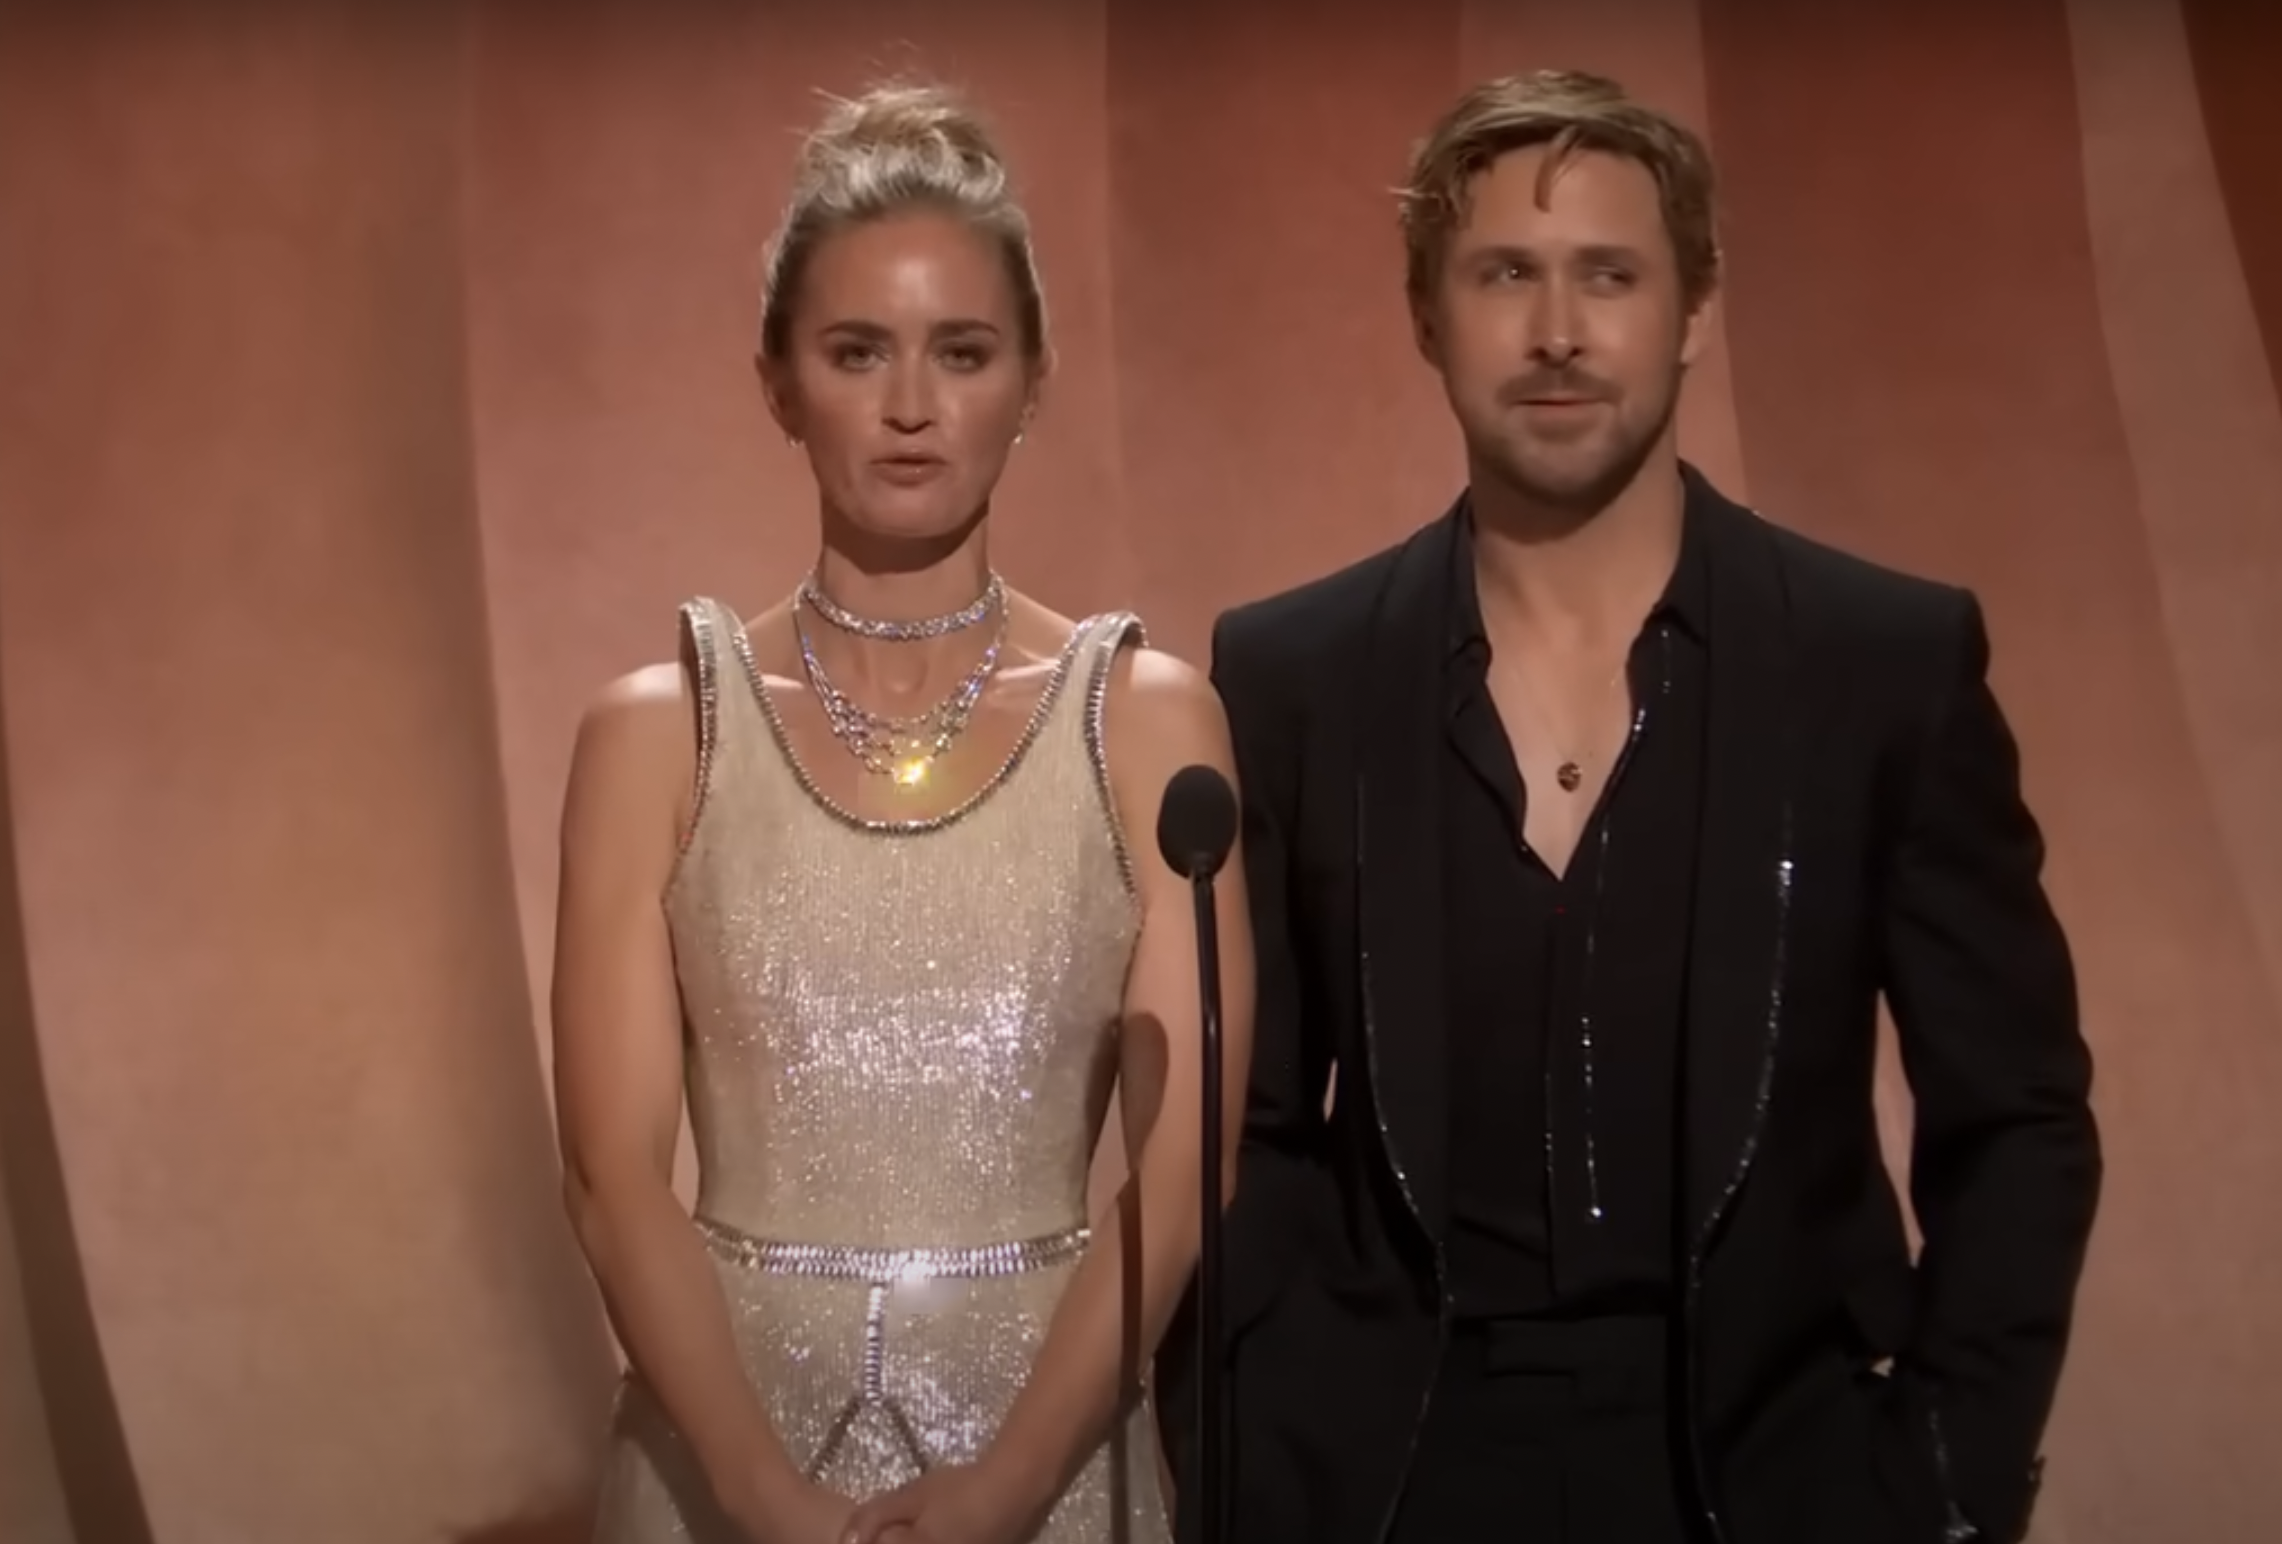 Strange Detail On Emily Blunt’s Oscars Dress Is Baffling Fans: ‘I Can’t Unsee It’